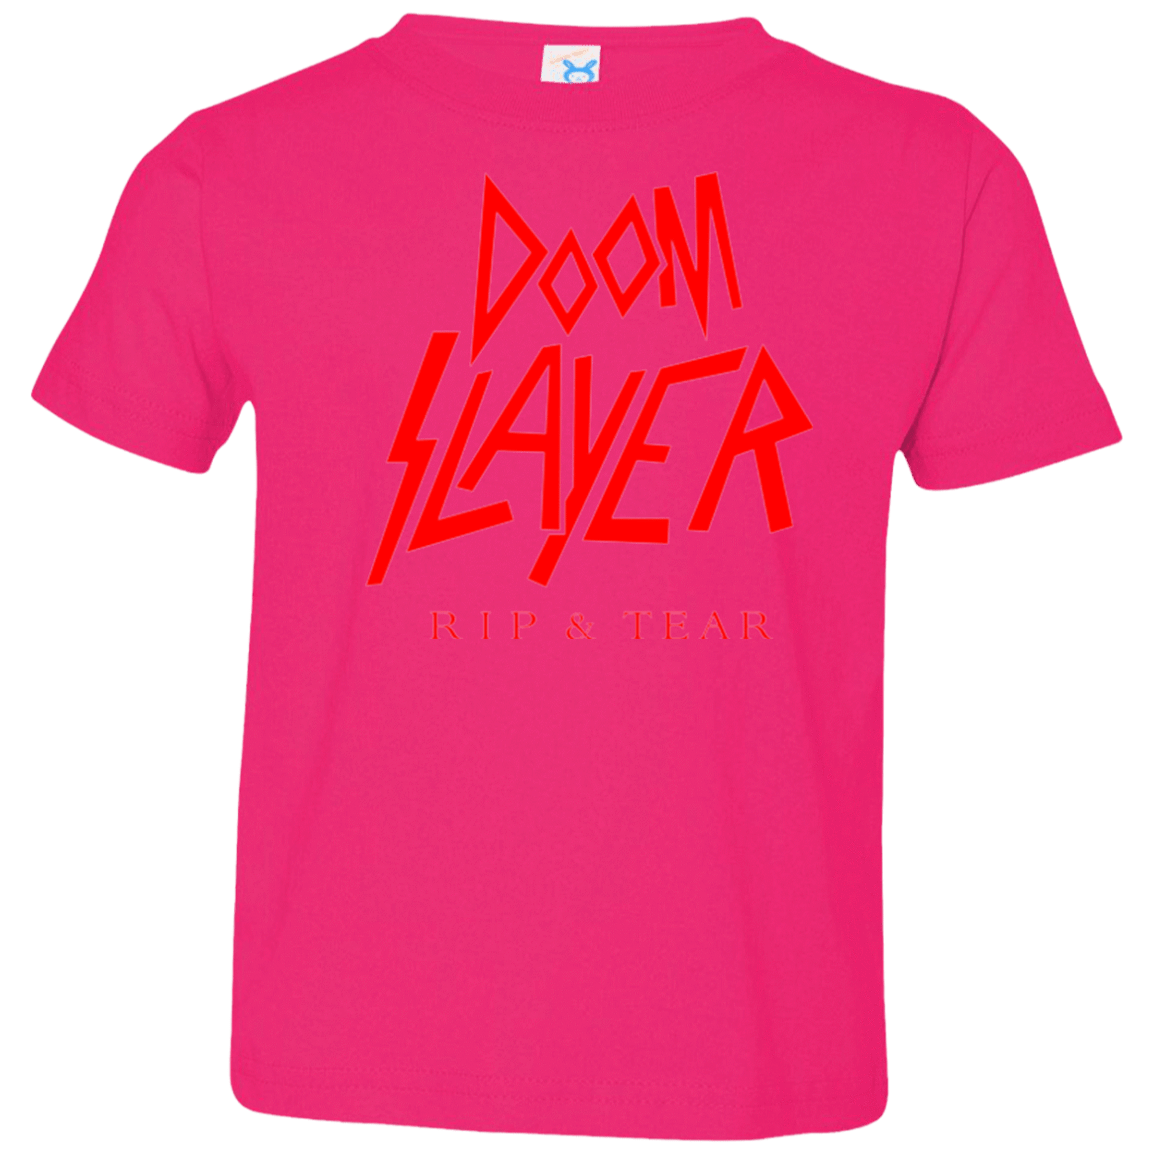 T-Shirts Hot Pink / 2T Doom Slayer Toddler Premium T-Shirt